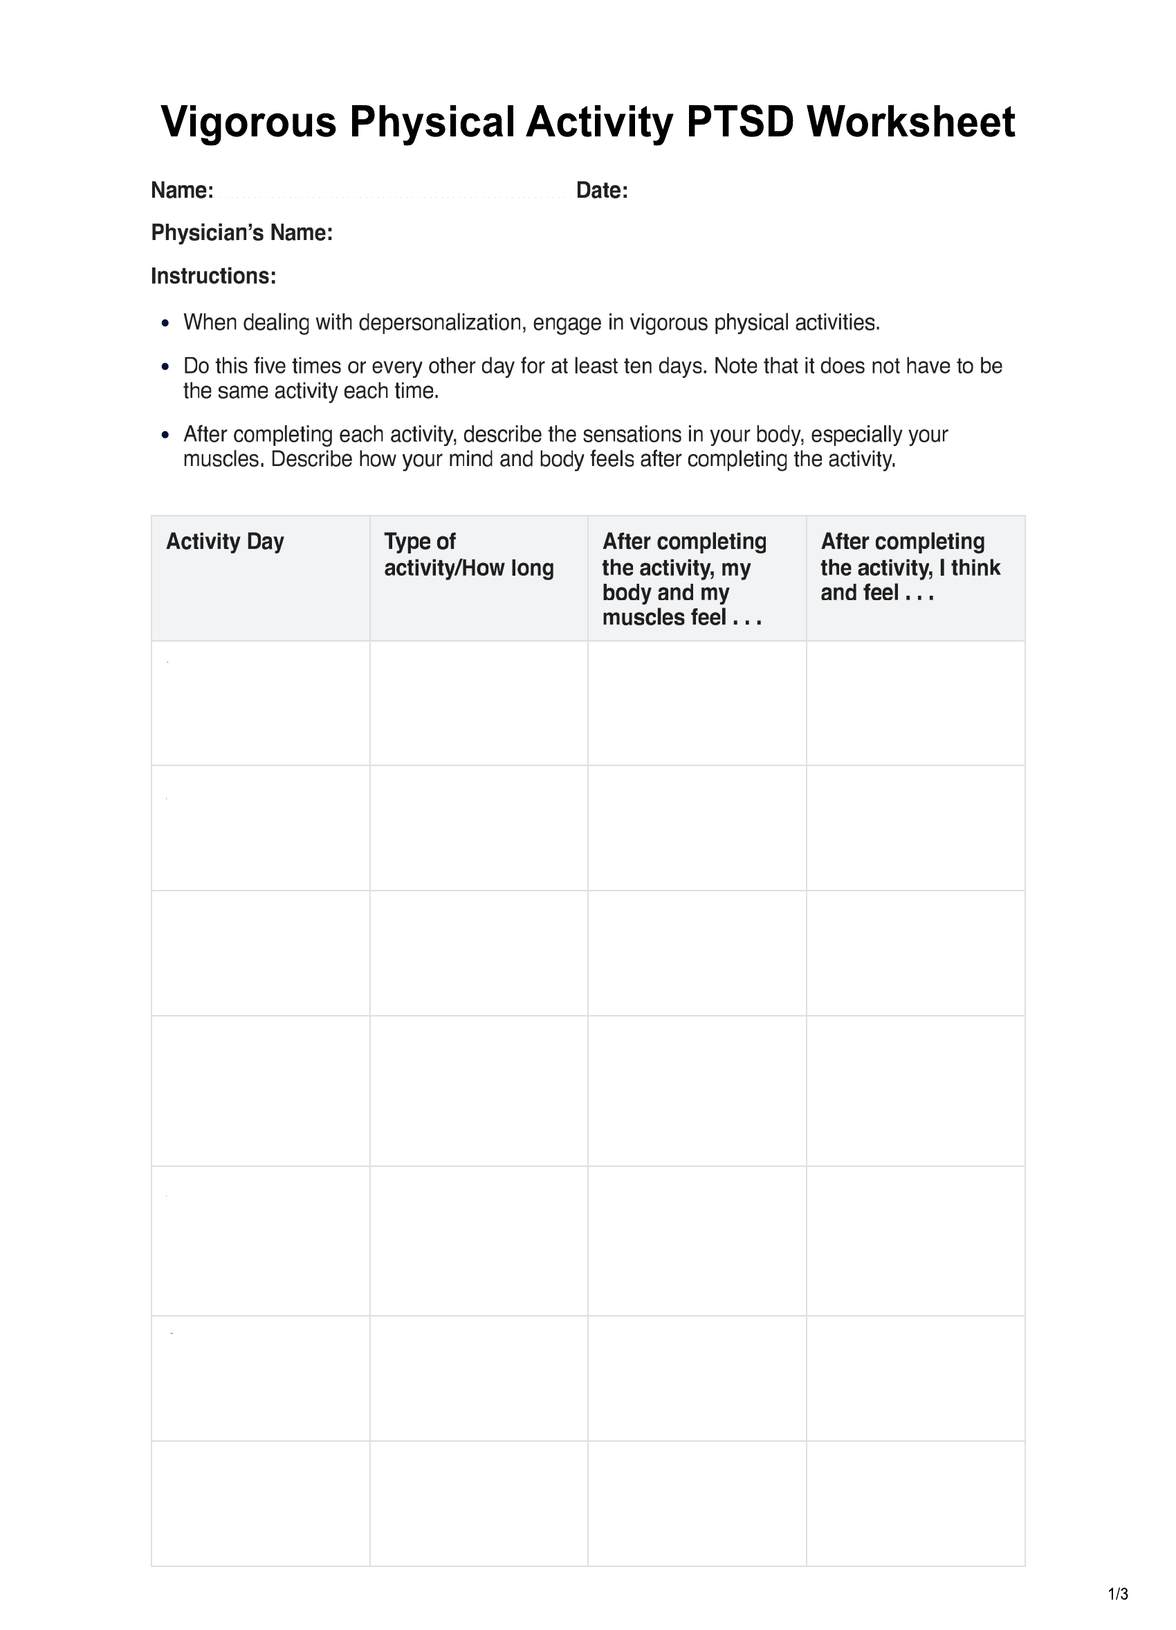 Vigorous Physical Activity PTSD Worksheet PDF Example